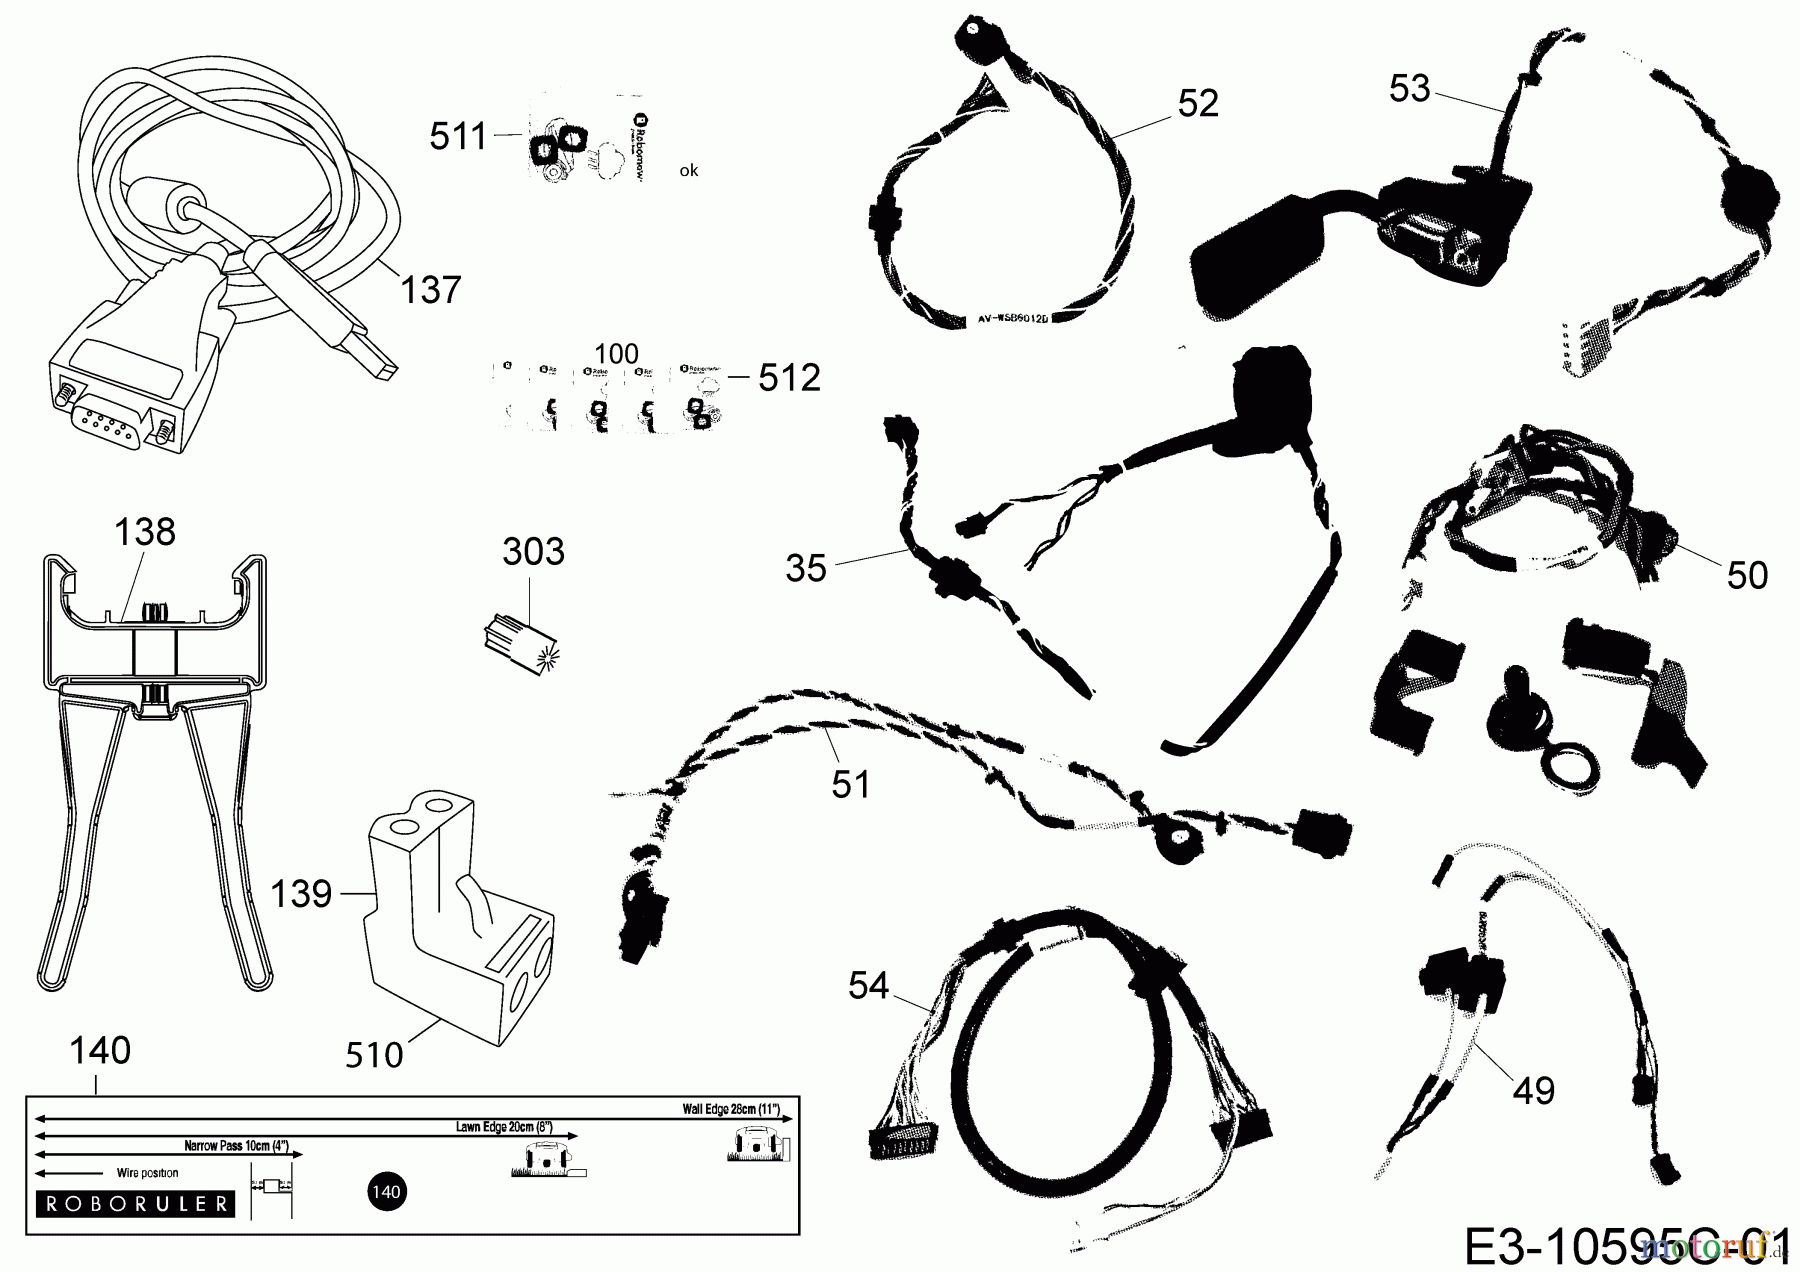  Robomow Mähroboter MS 1000 (Black) PRD6100P1  (2016) Kabel, Kabelanschluß, Regensensor, Werkzeug